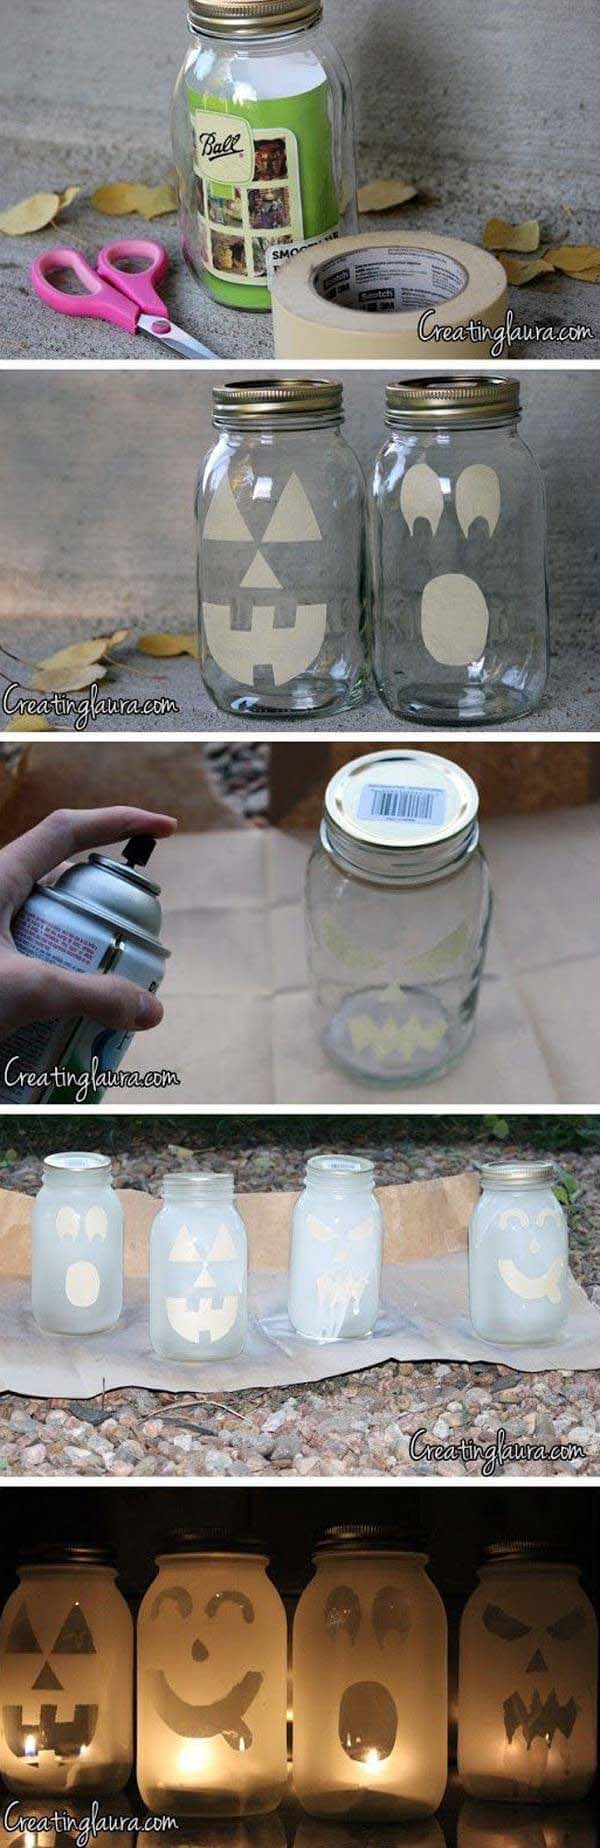 42. Spray Painted Mason Jar Ghosts #halloween #masonjar #crafts #decorhomeideas